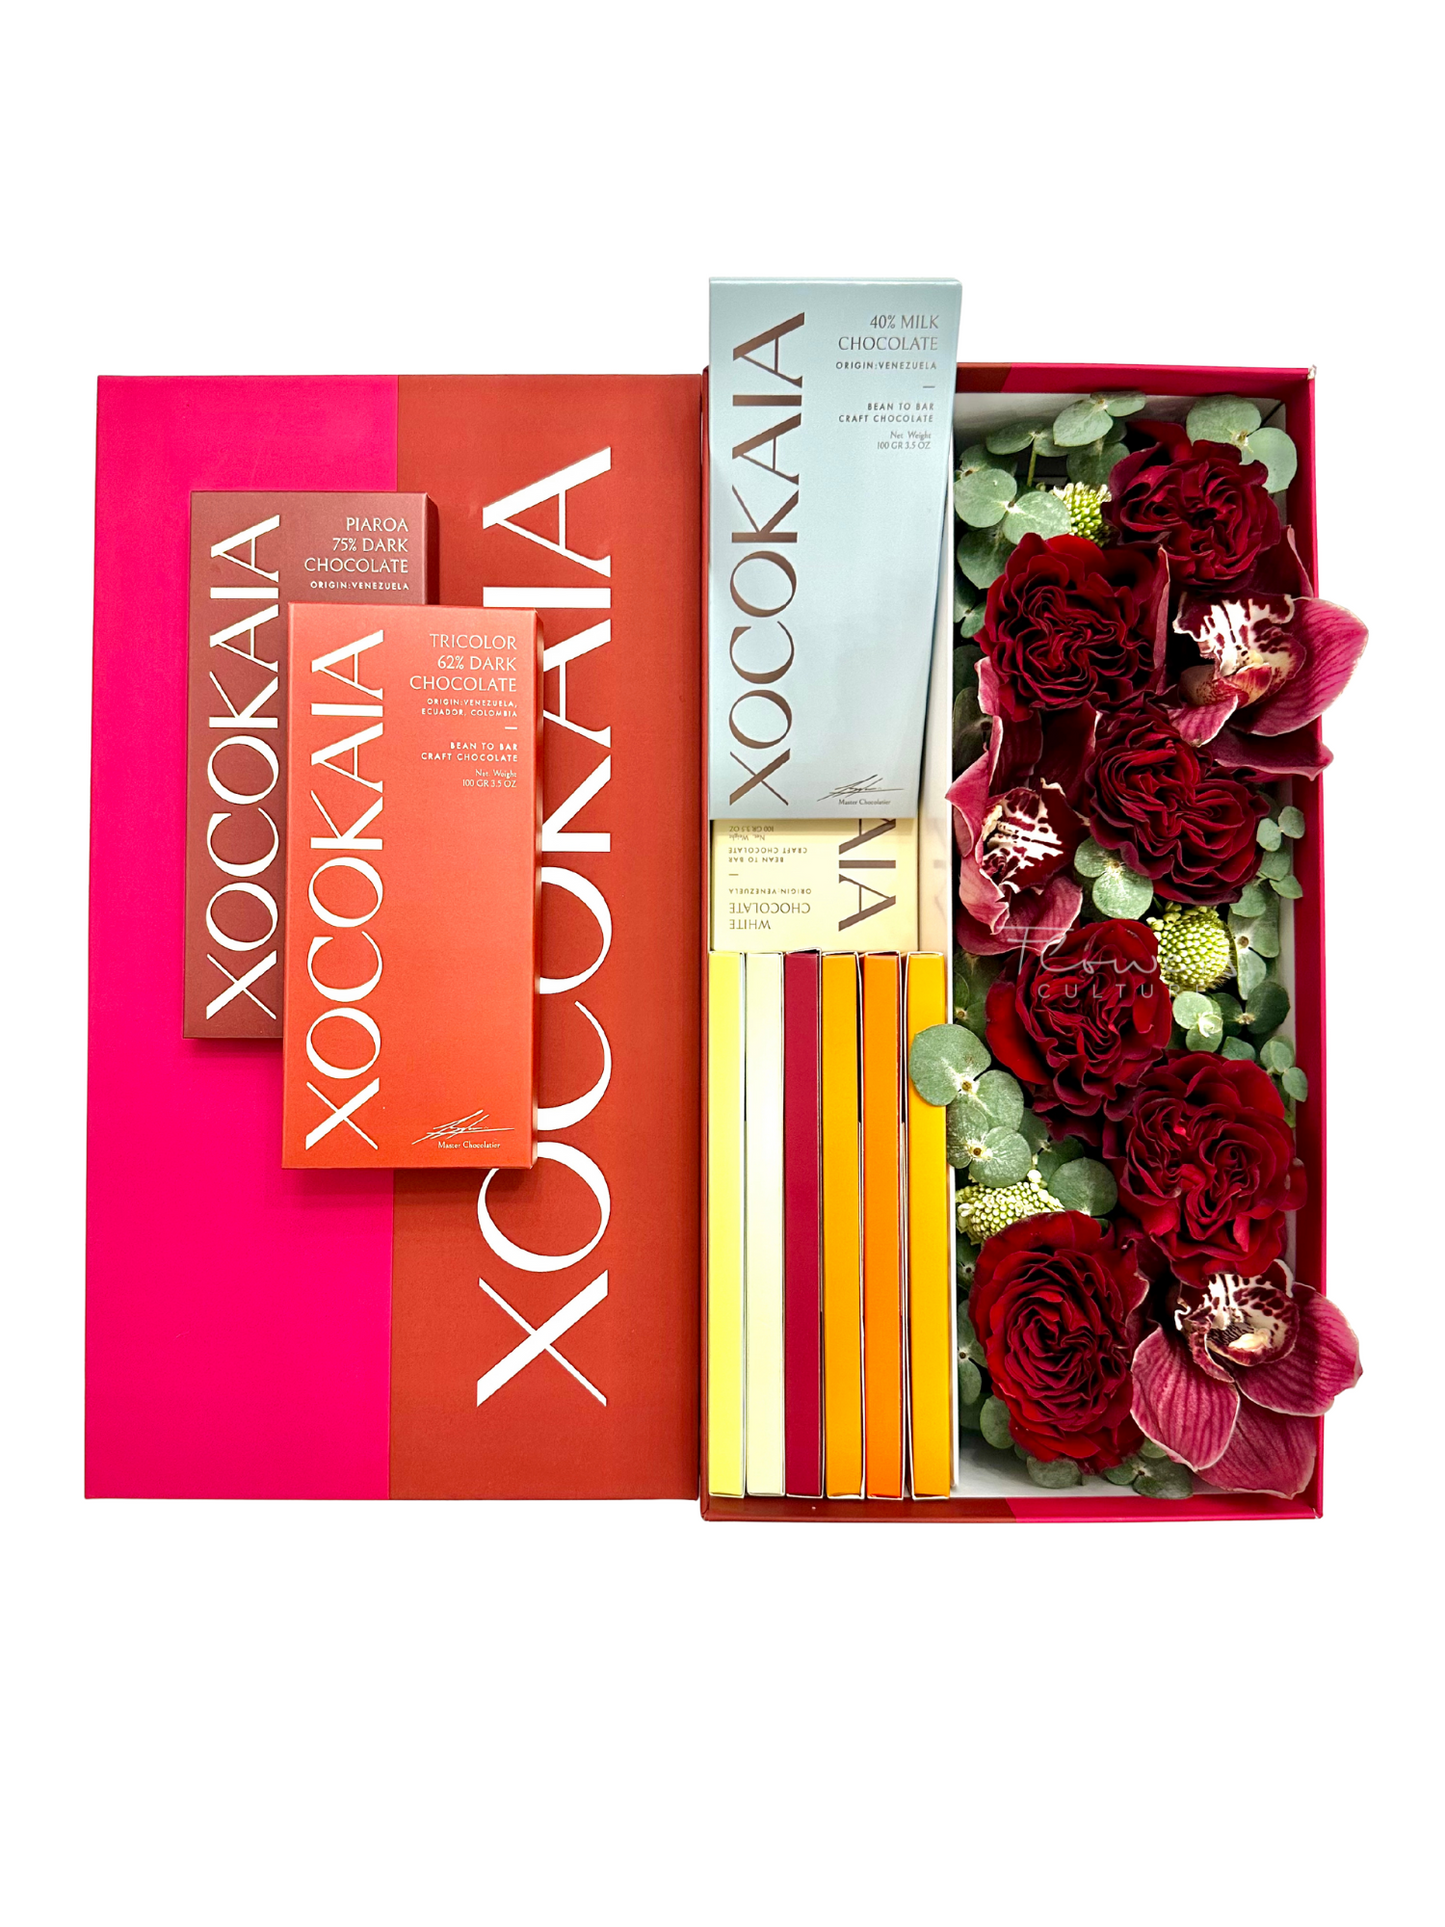 XOCOKAIA Floral Gift Set